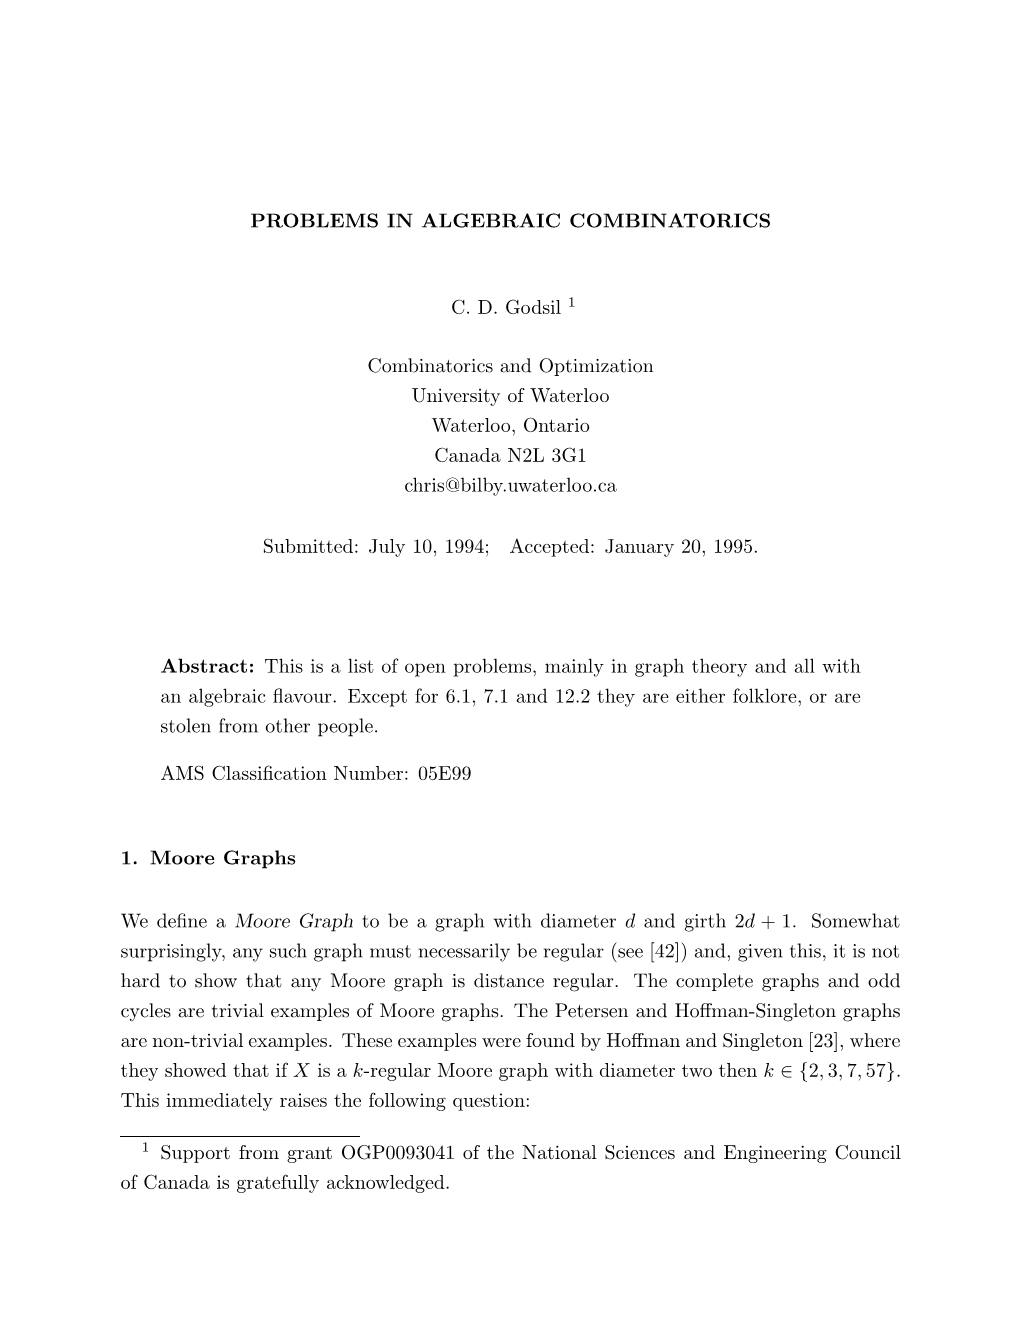 Problems in Algebraic Combinatorics